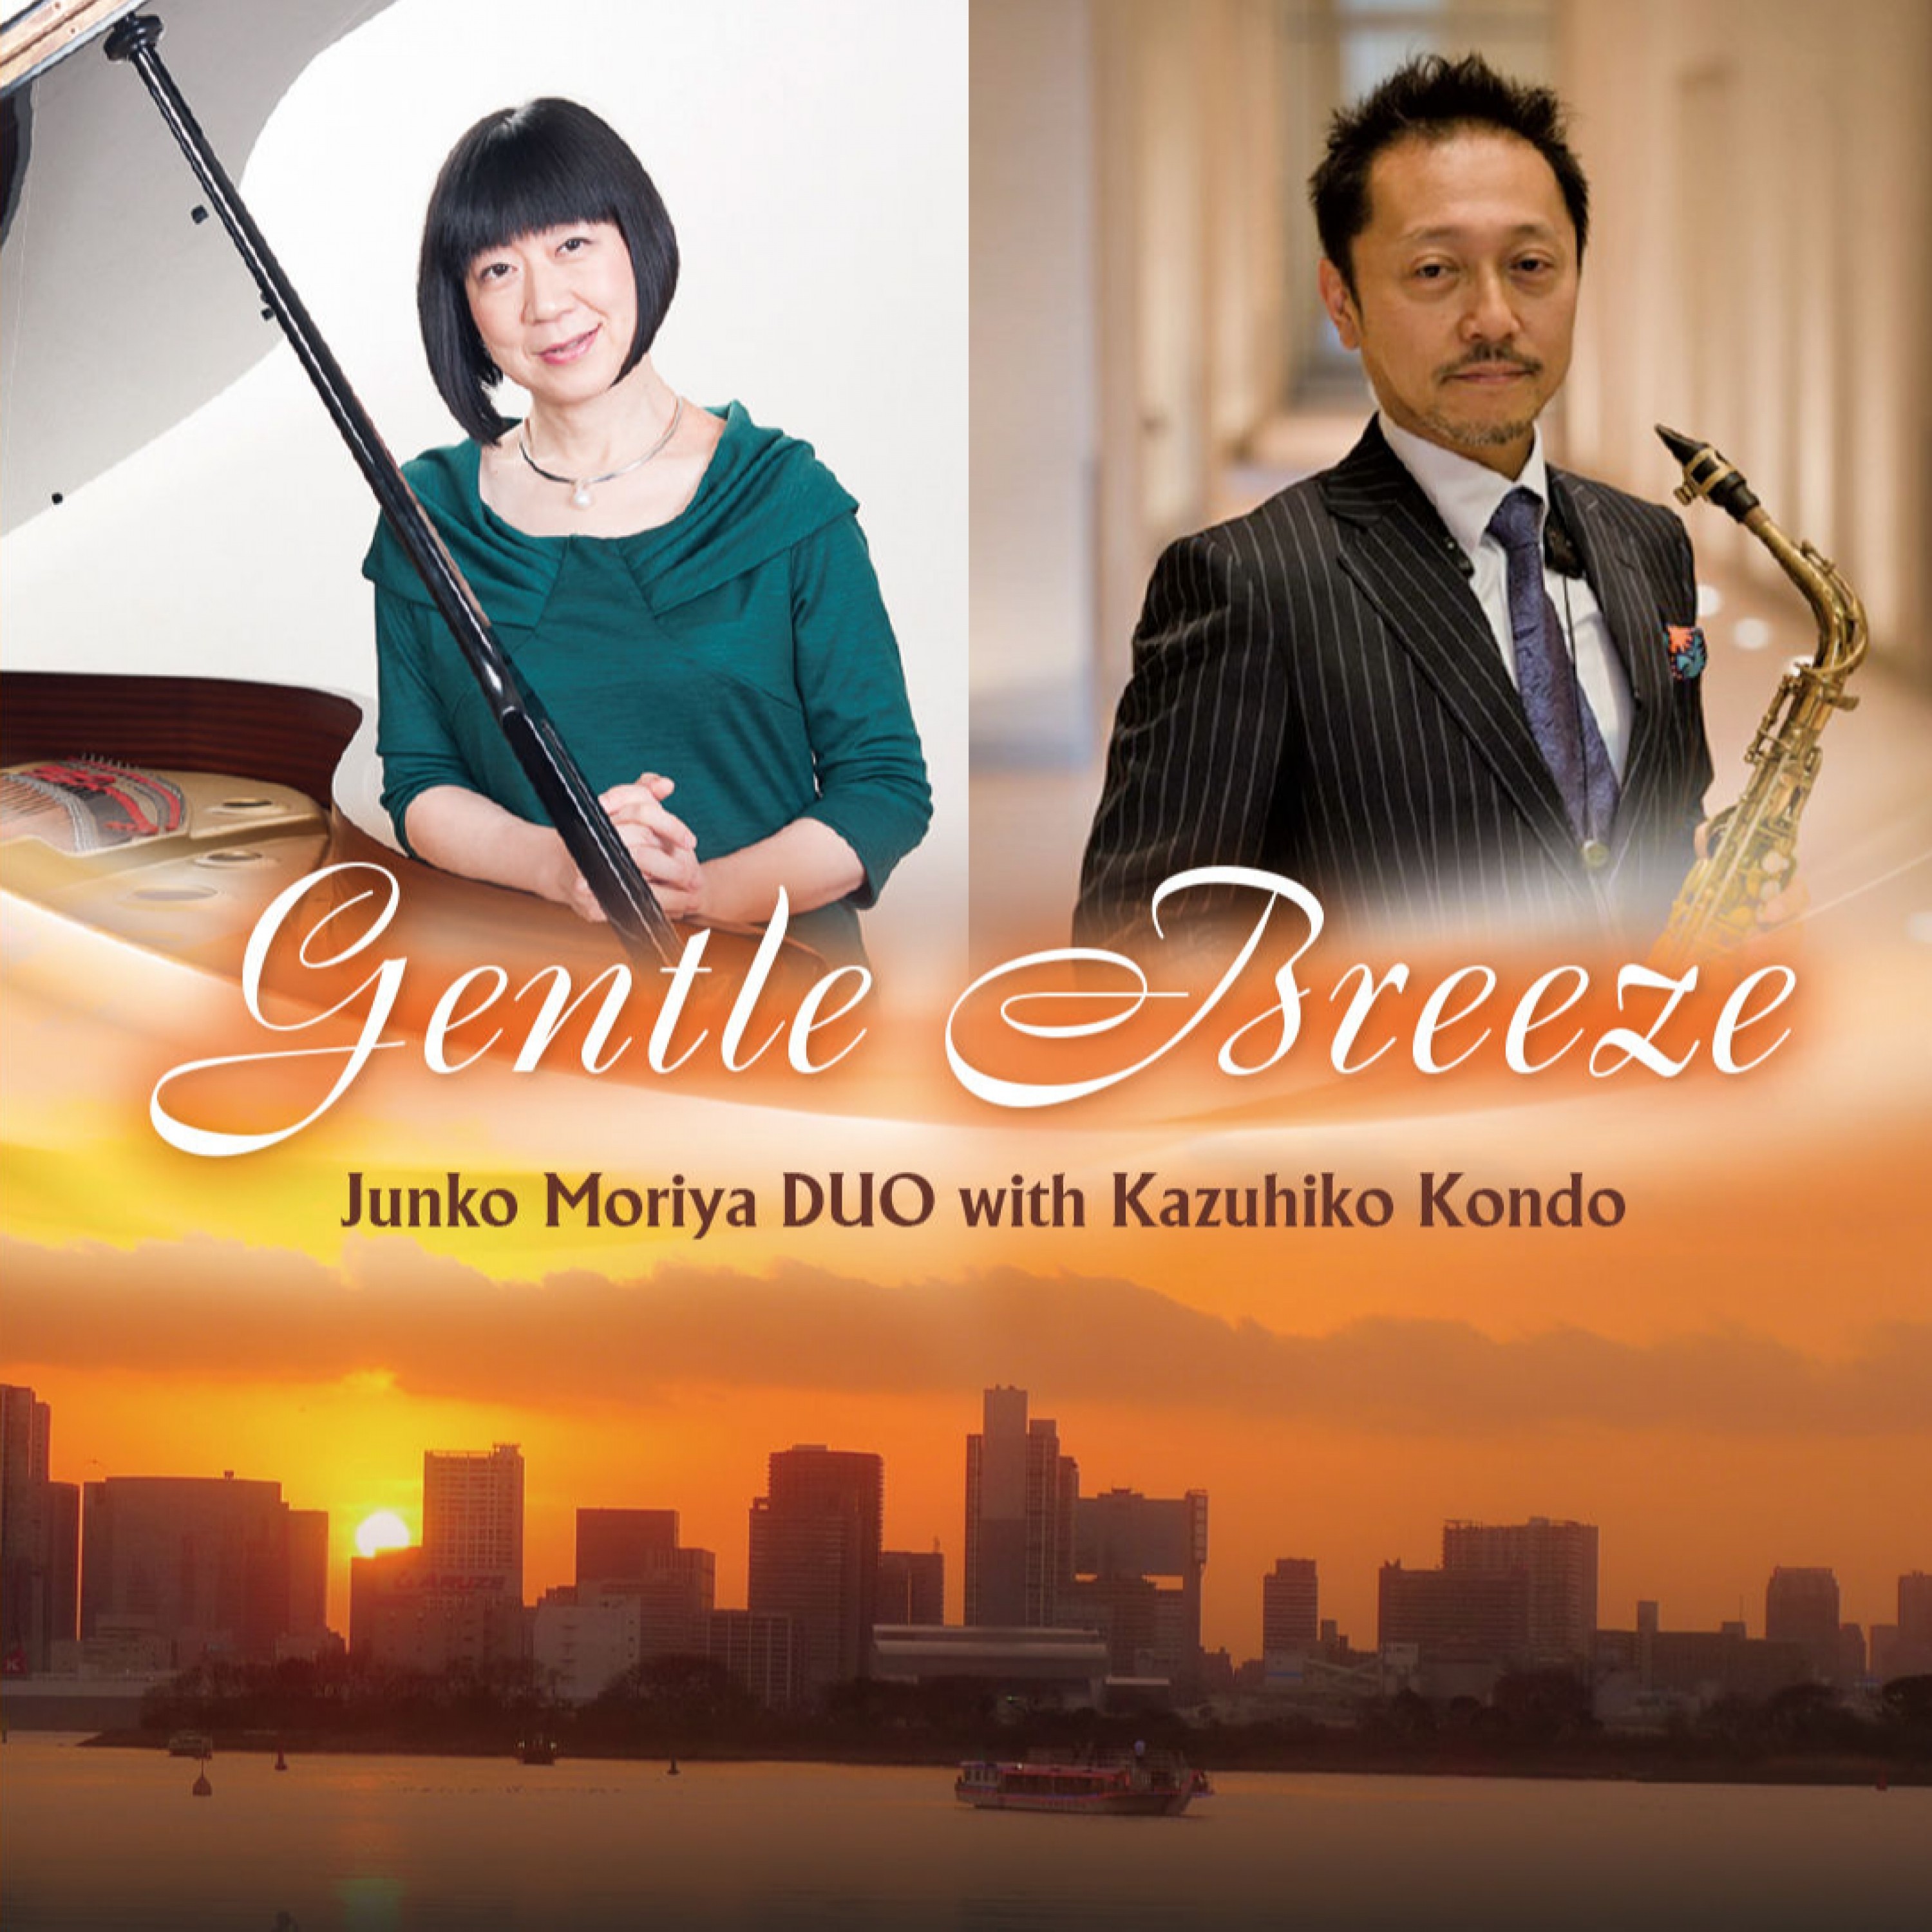 Gentle Breeze 　Junko Moriya DUO with Kazuhiko Kondo